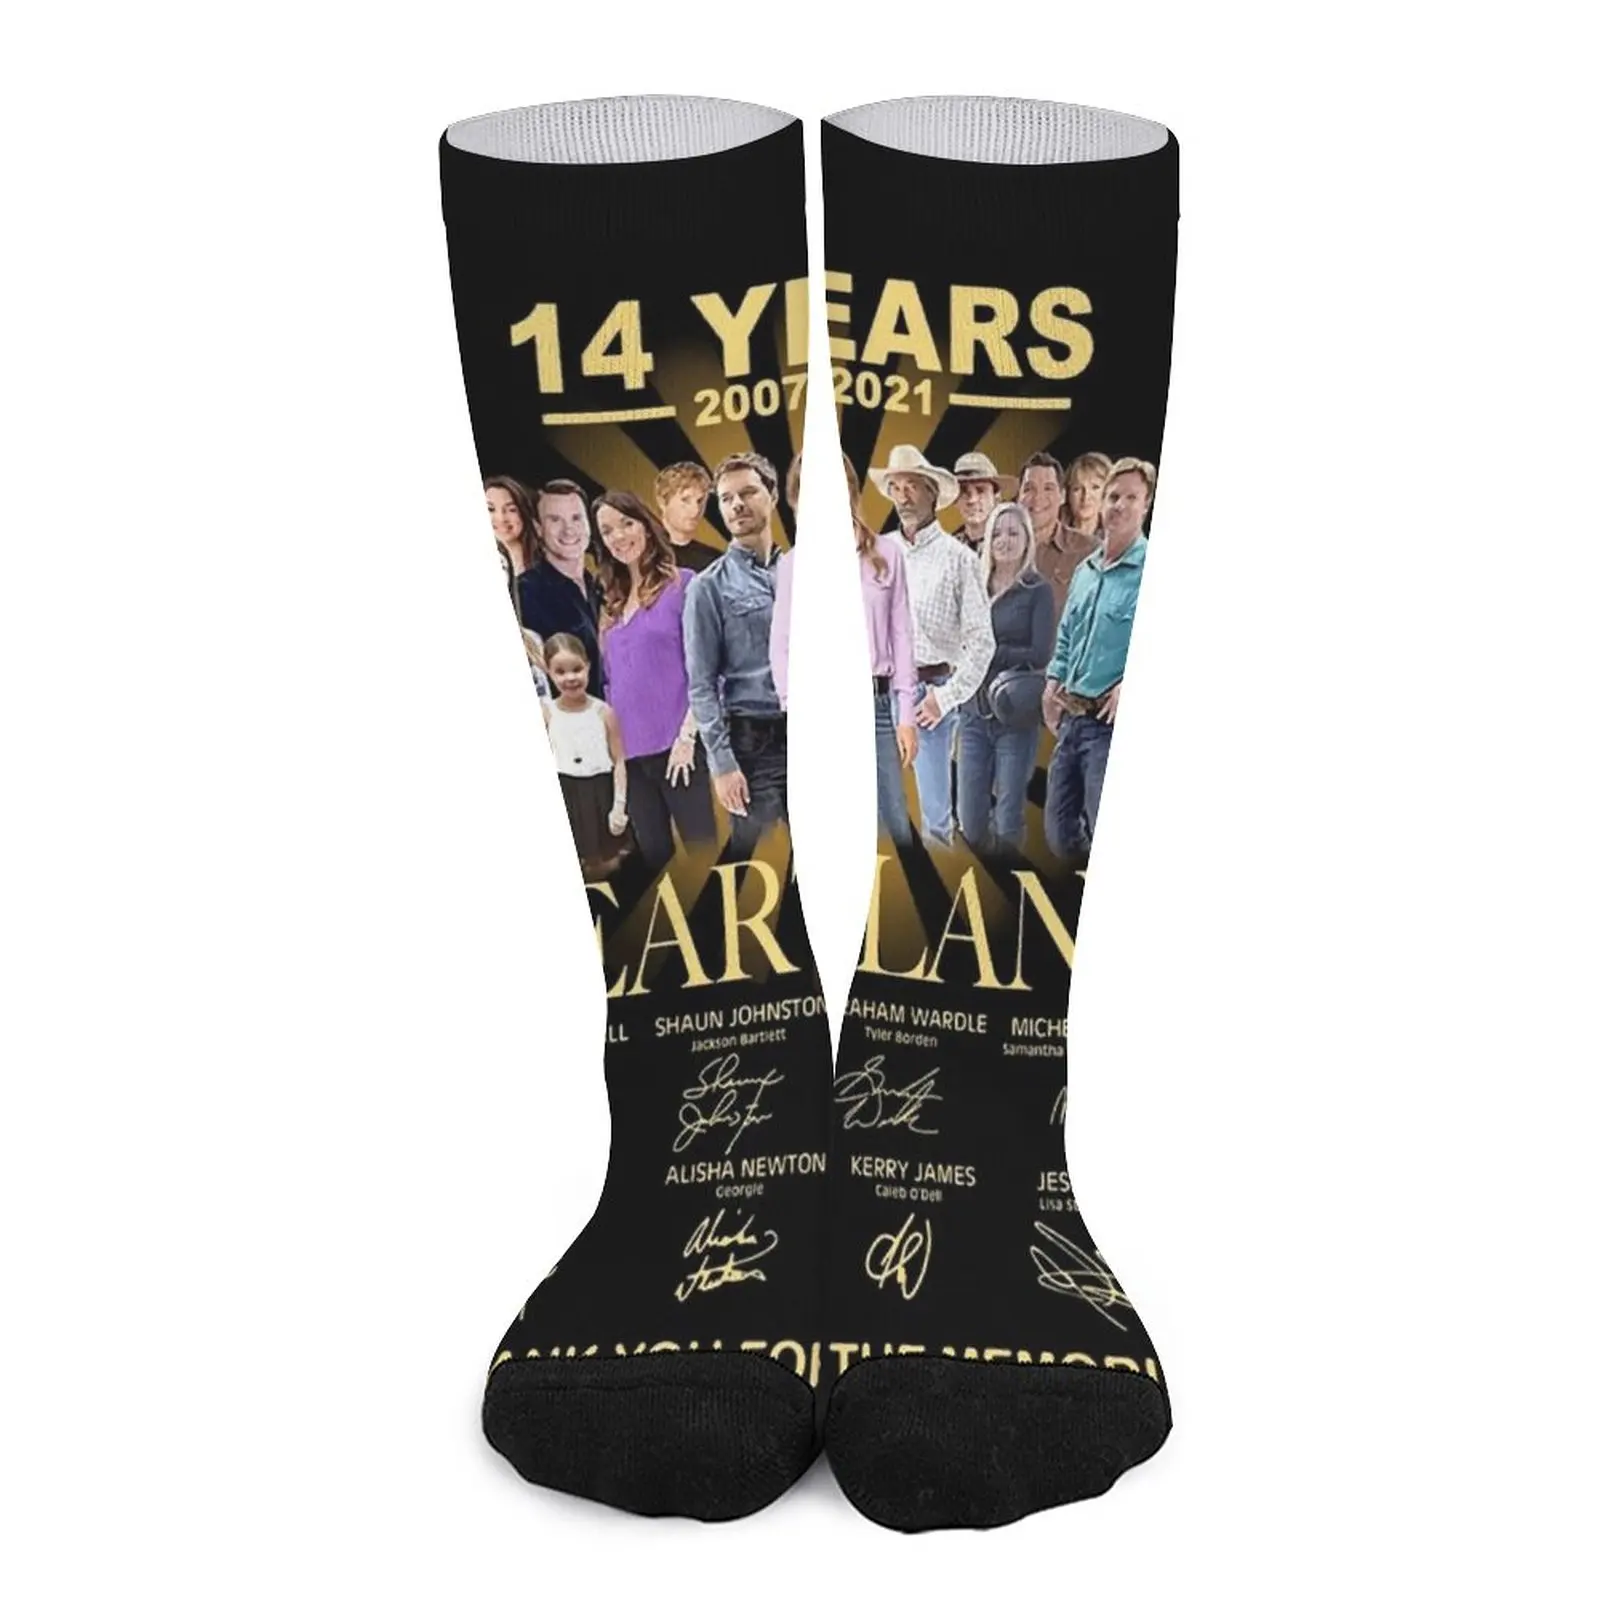 14 Years 2007-2021 Heartland Socks compression socks Women socks funny